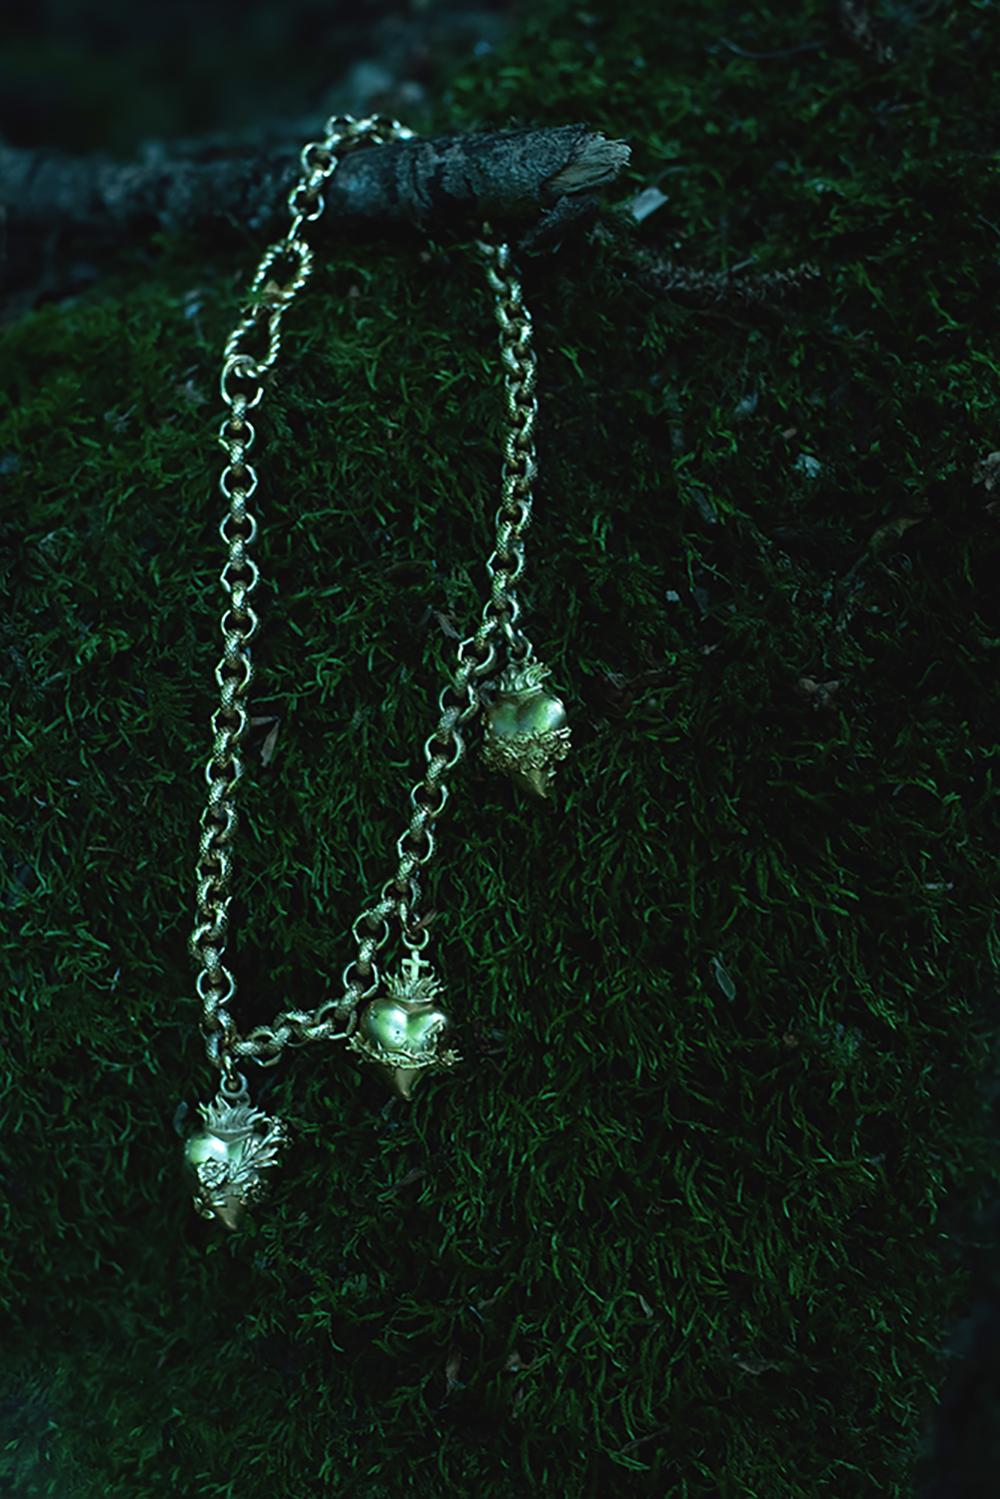 Chain choker necklace with 3 mobile pendants
Pendant measures 1,18